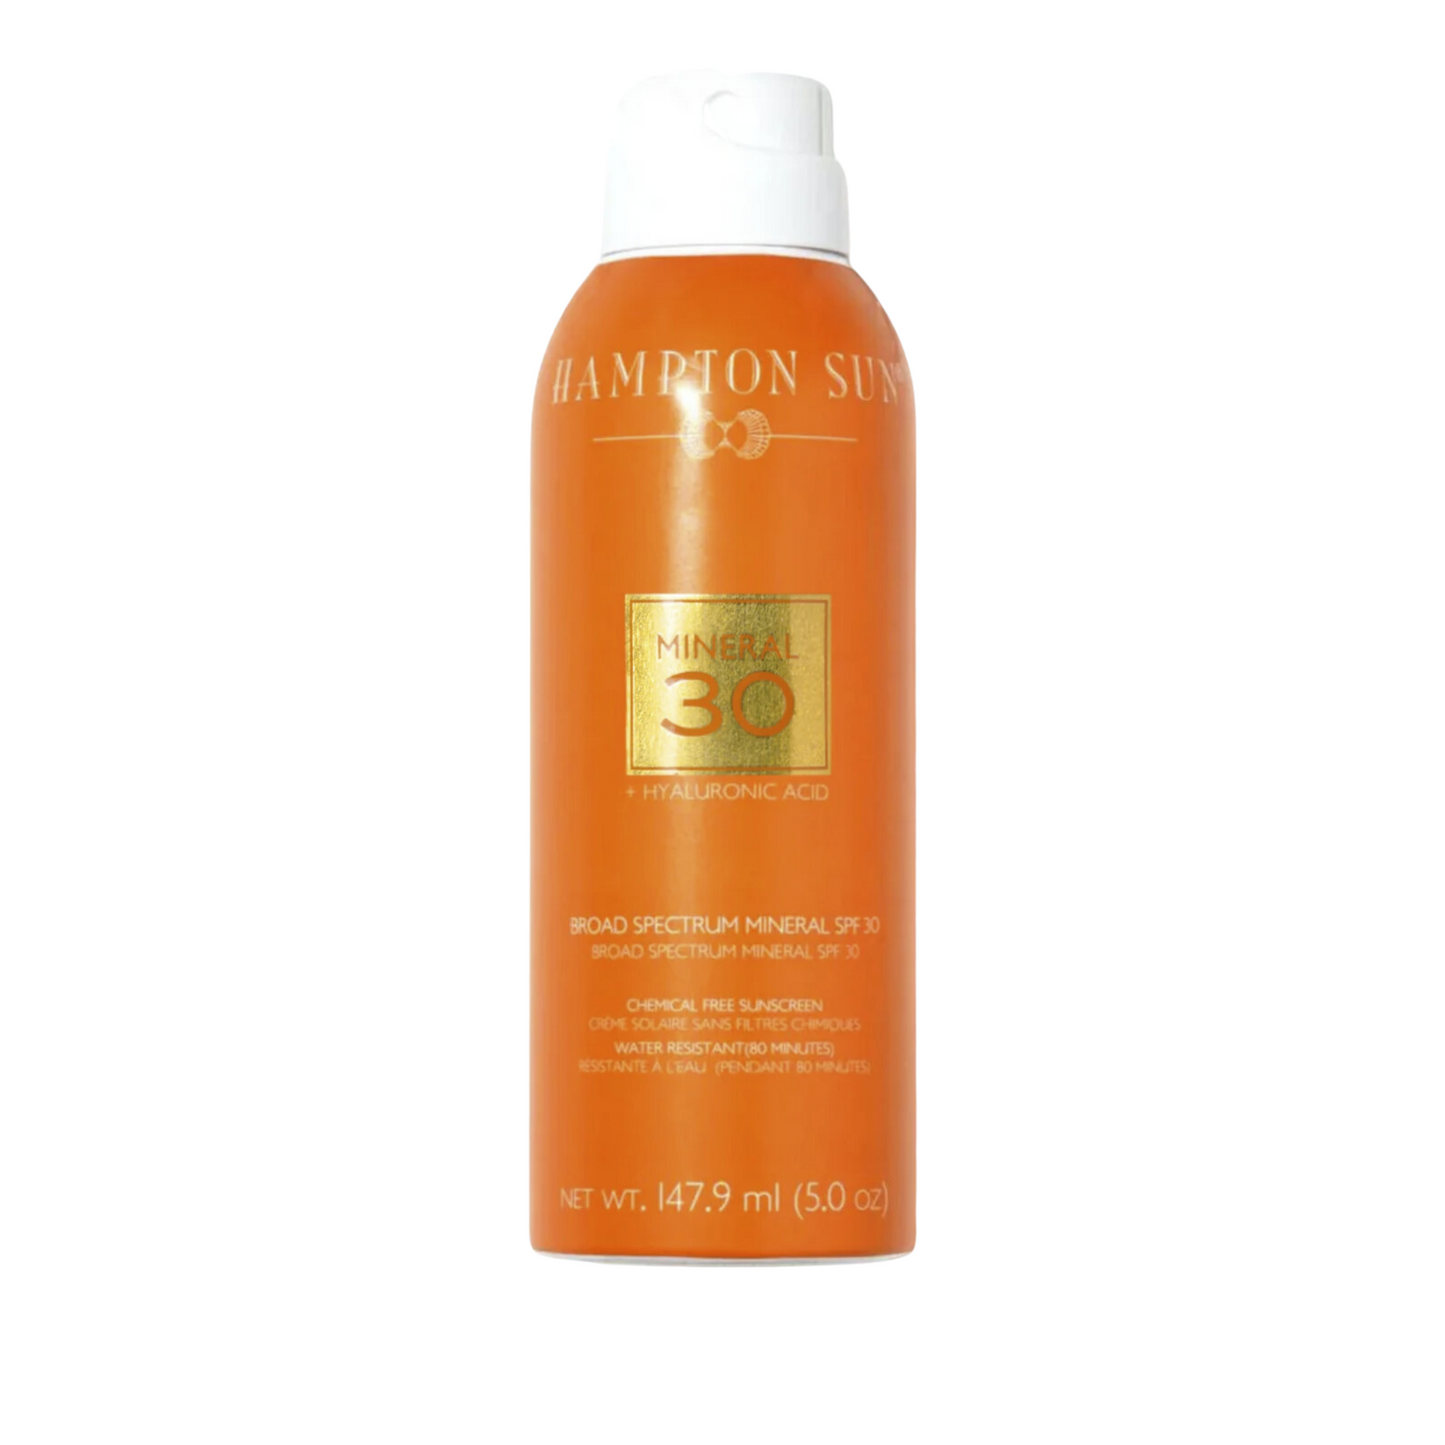 Best Seller - Hampton Sun - SPF 30 - Spray Tan Safe Mineral Sunscreen - 6 oz